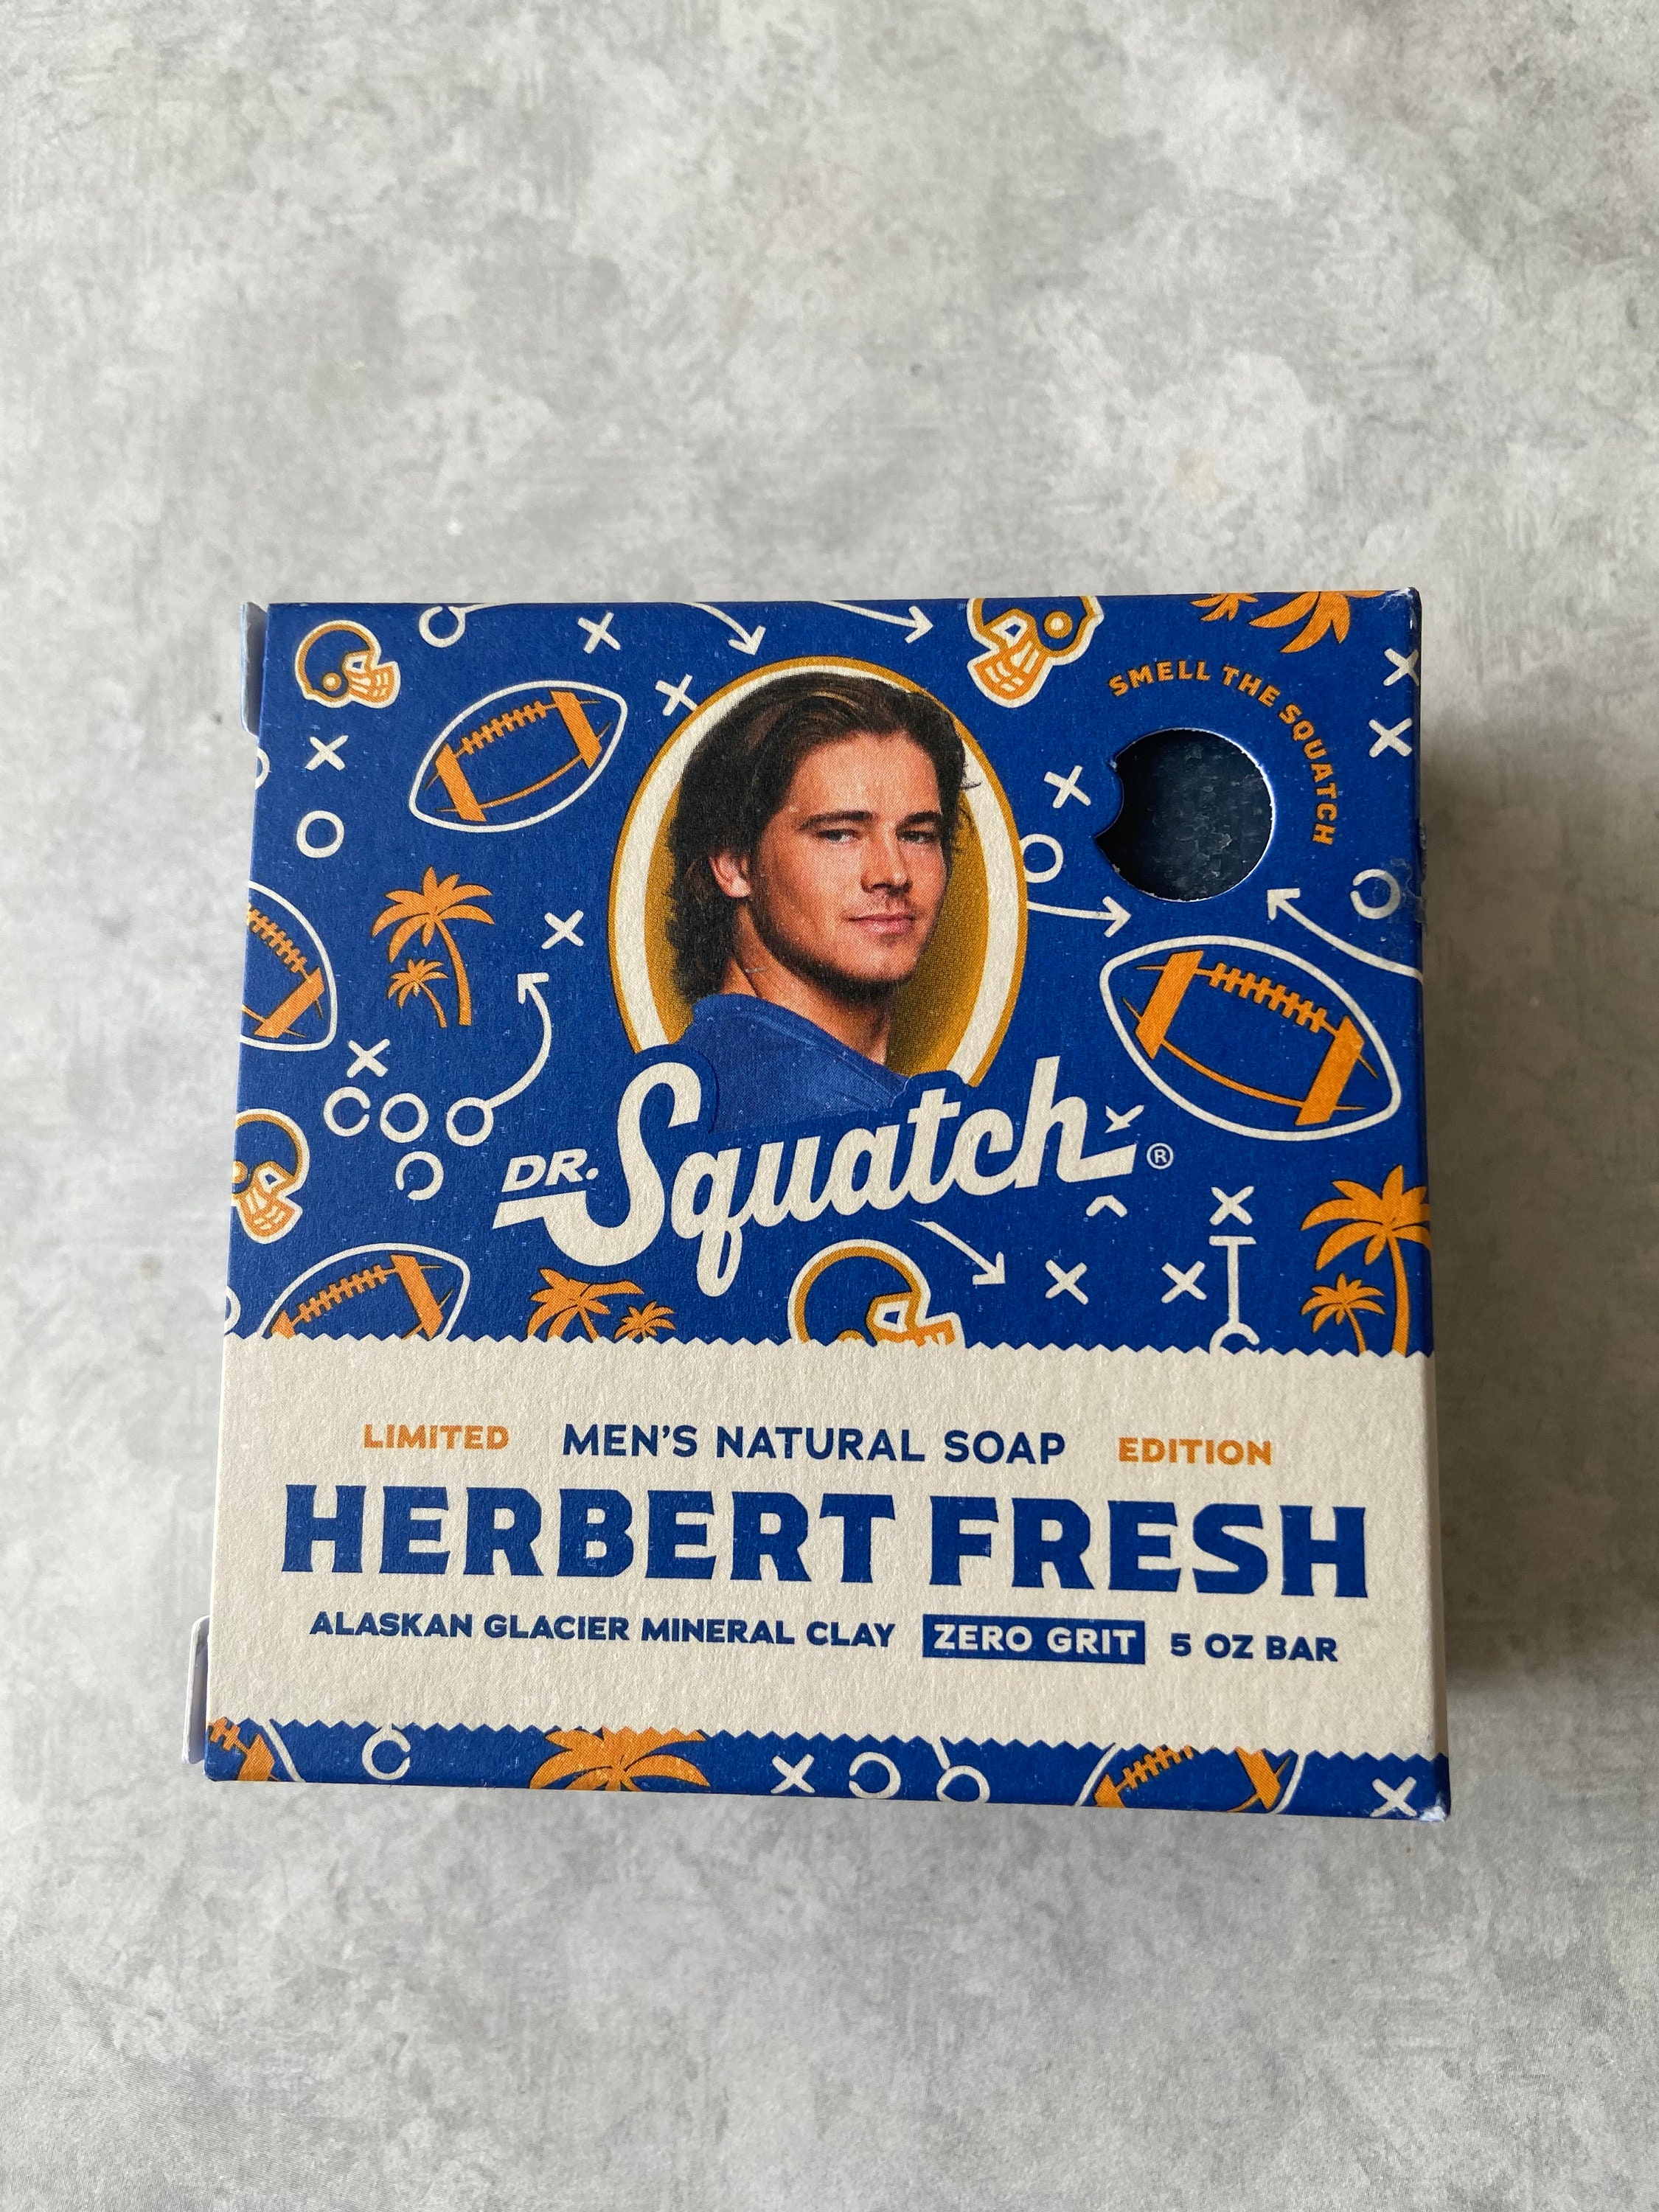 NEW: Face Wash - Dr. Squatch Soap Co